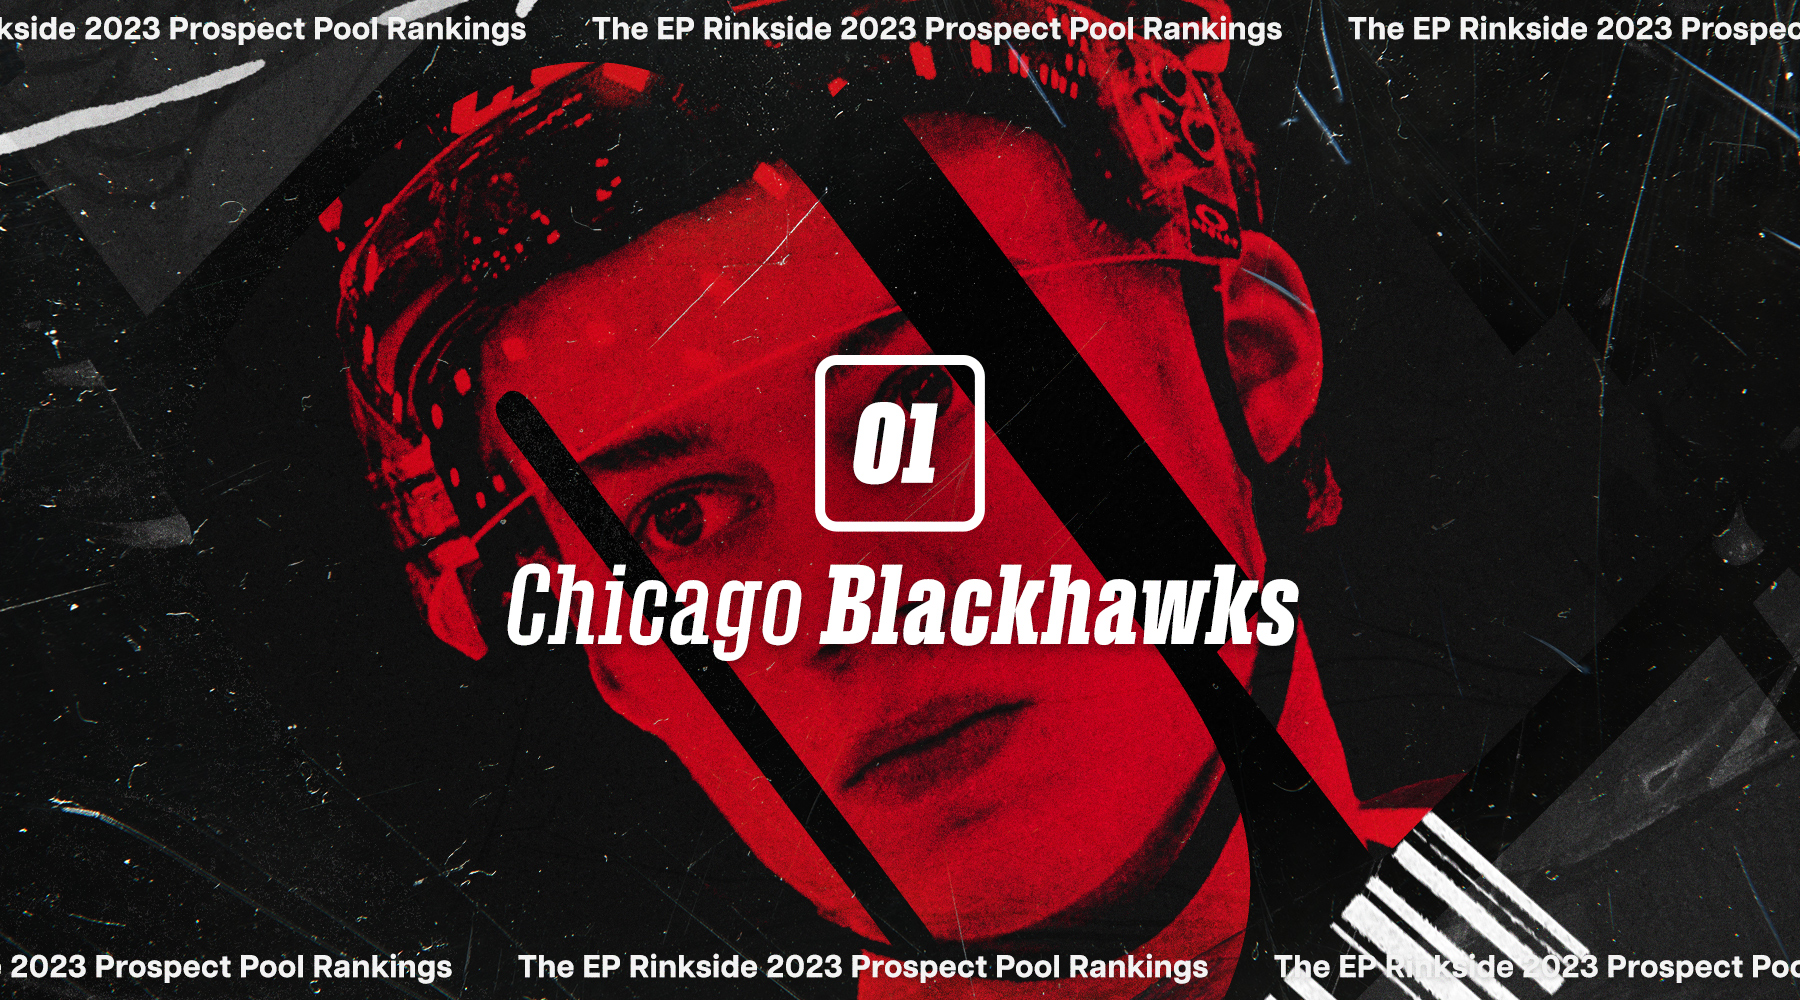 EP Rinkside 2023 NHL Prospect Pool Rankings: No. 1-ranked Chicago Blackhawks